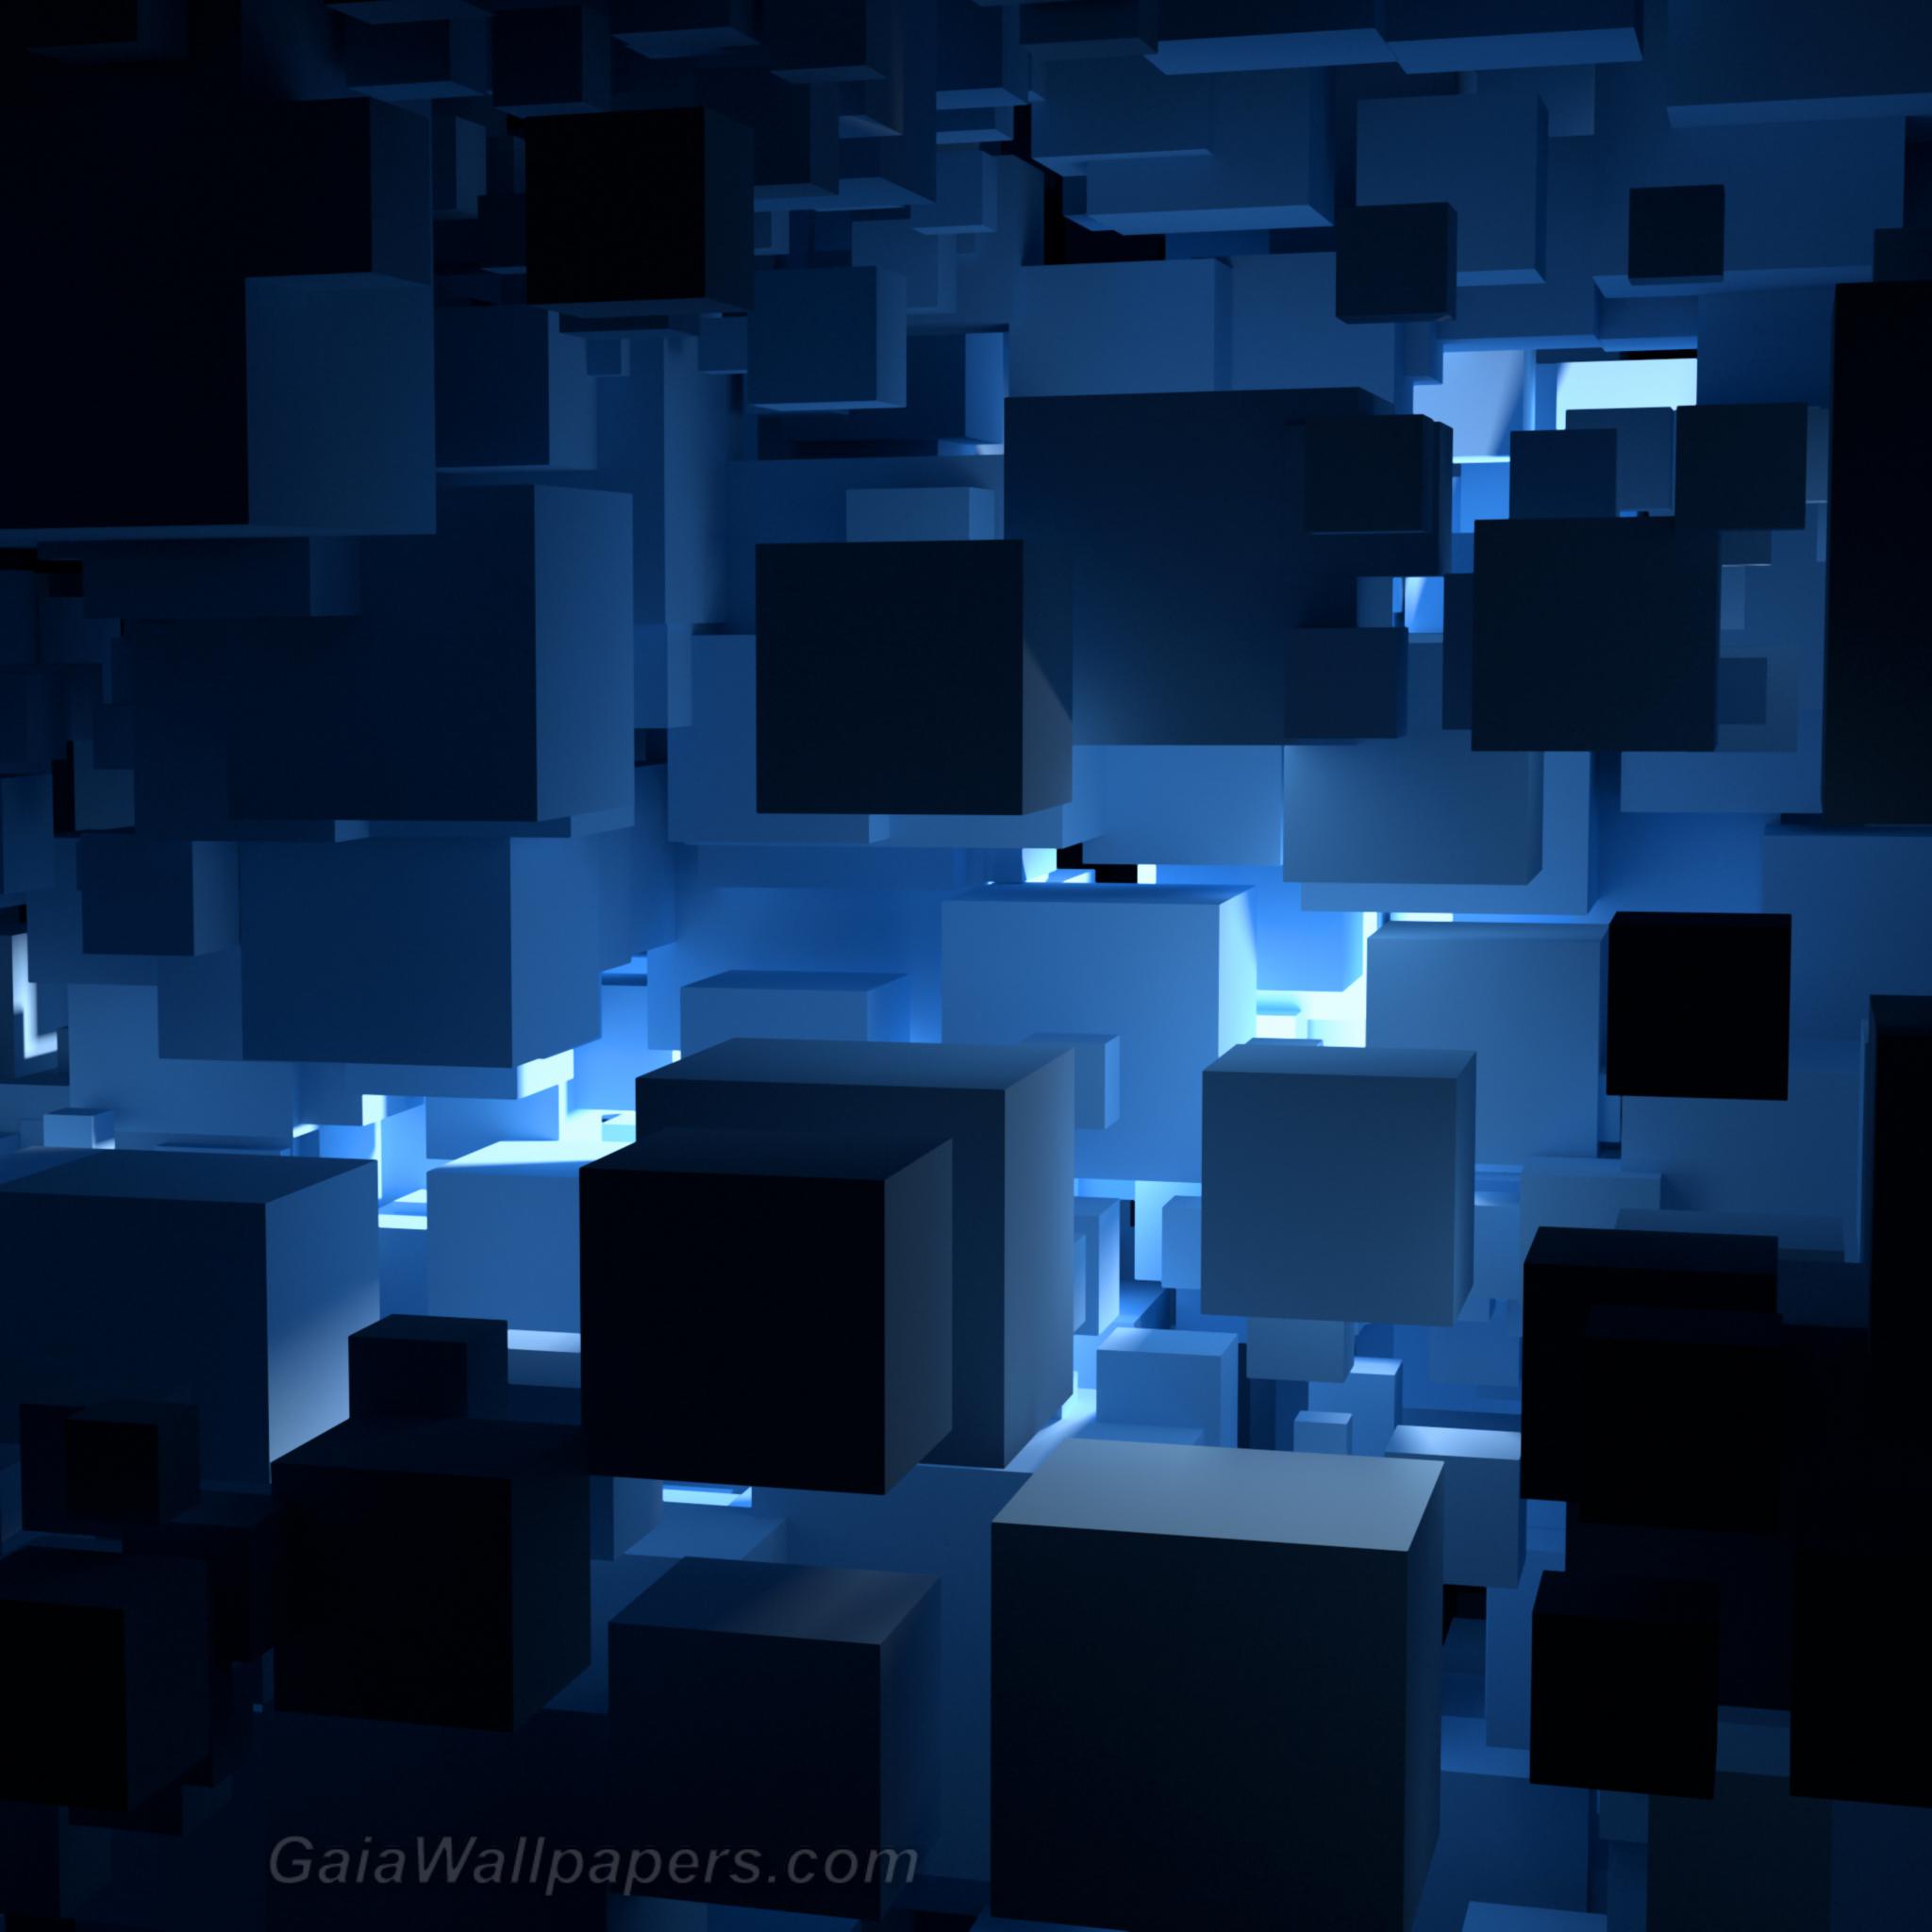 Virtual world of blue cubes - Free desktop wallpapers